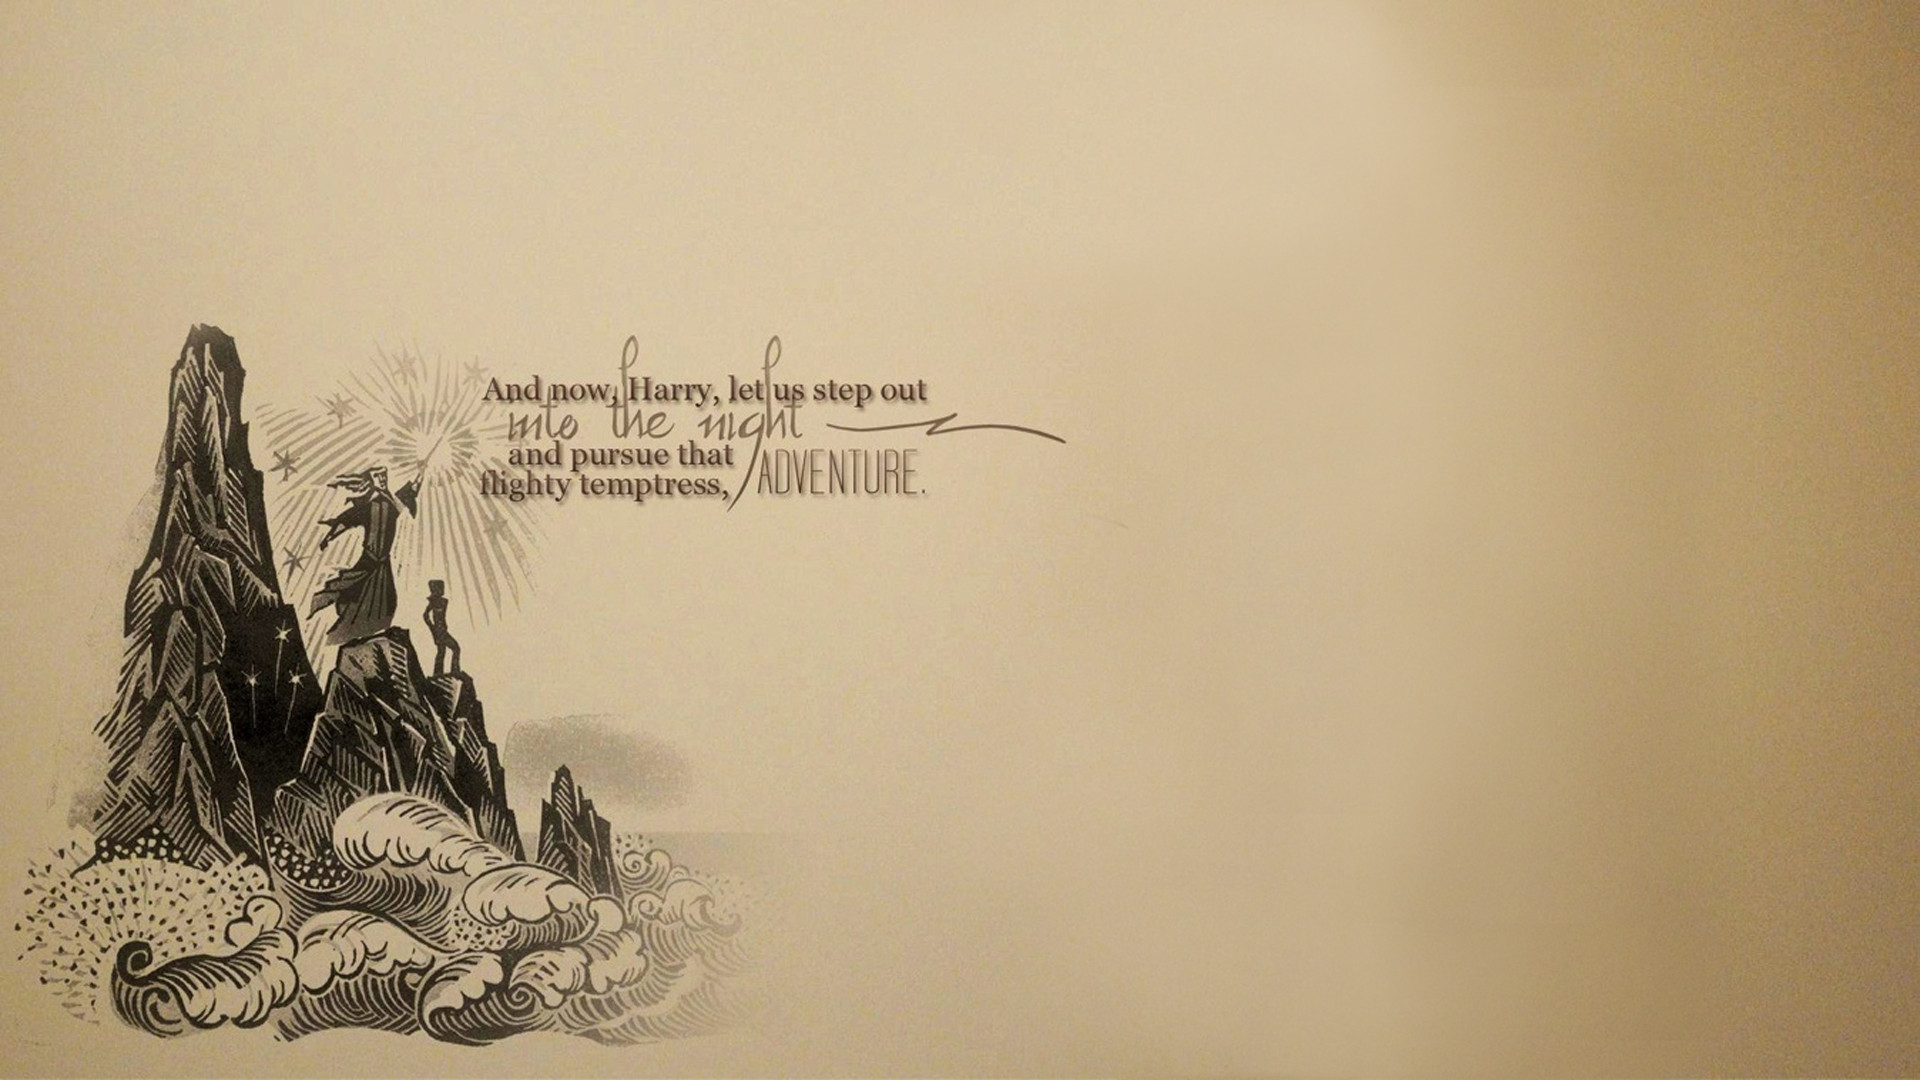 1920x1080 Harry Potter Quotes Wallpaper. QuotesGram